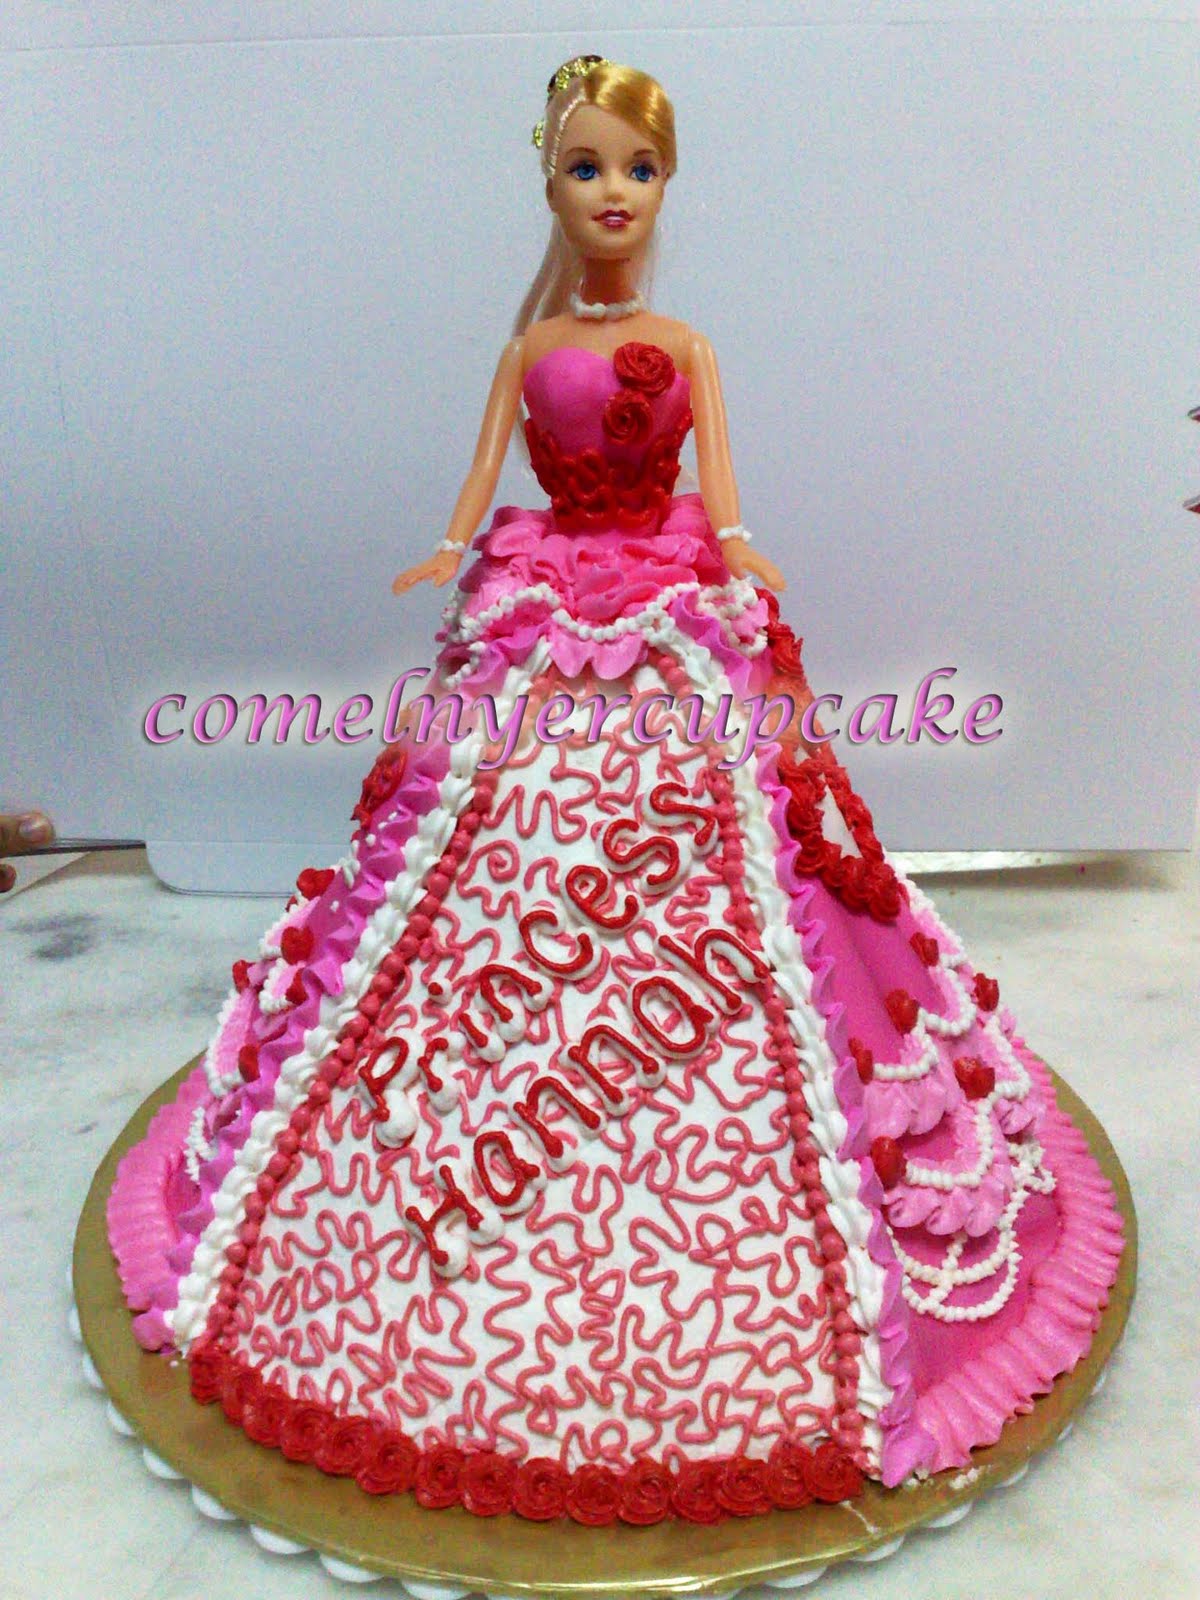 Comelnyercupcake: Barbie doll cakes: Princess Hannah